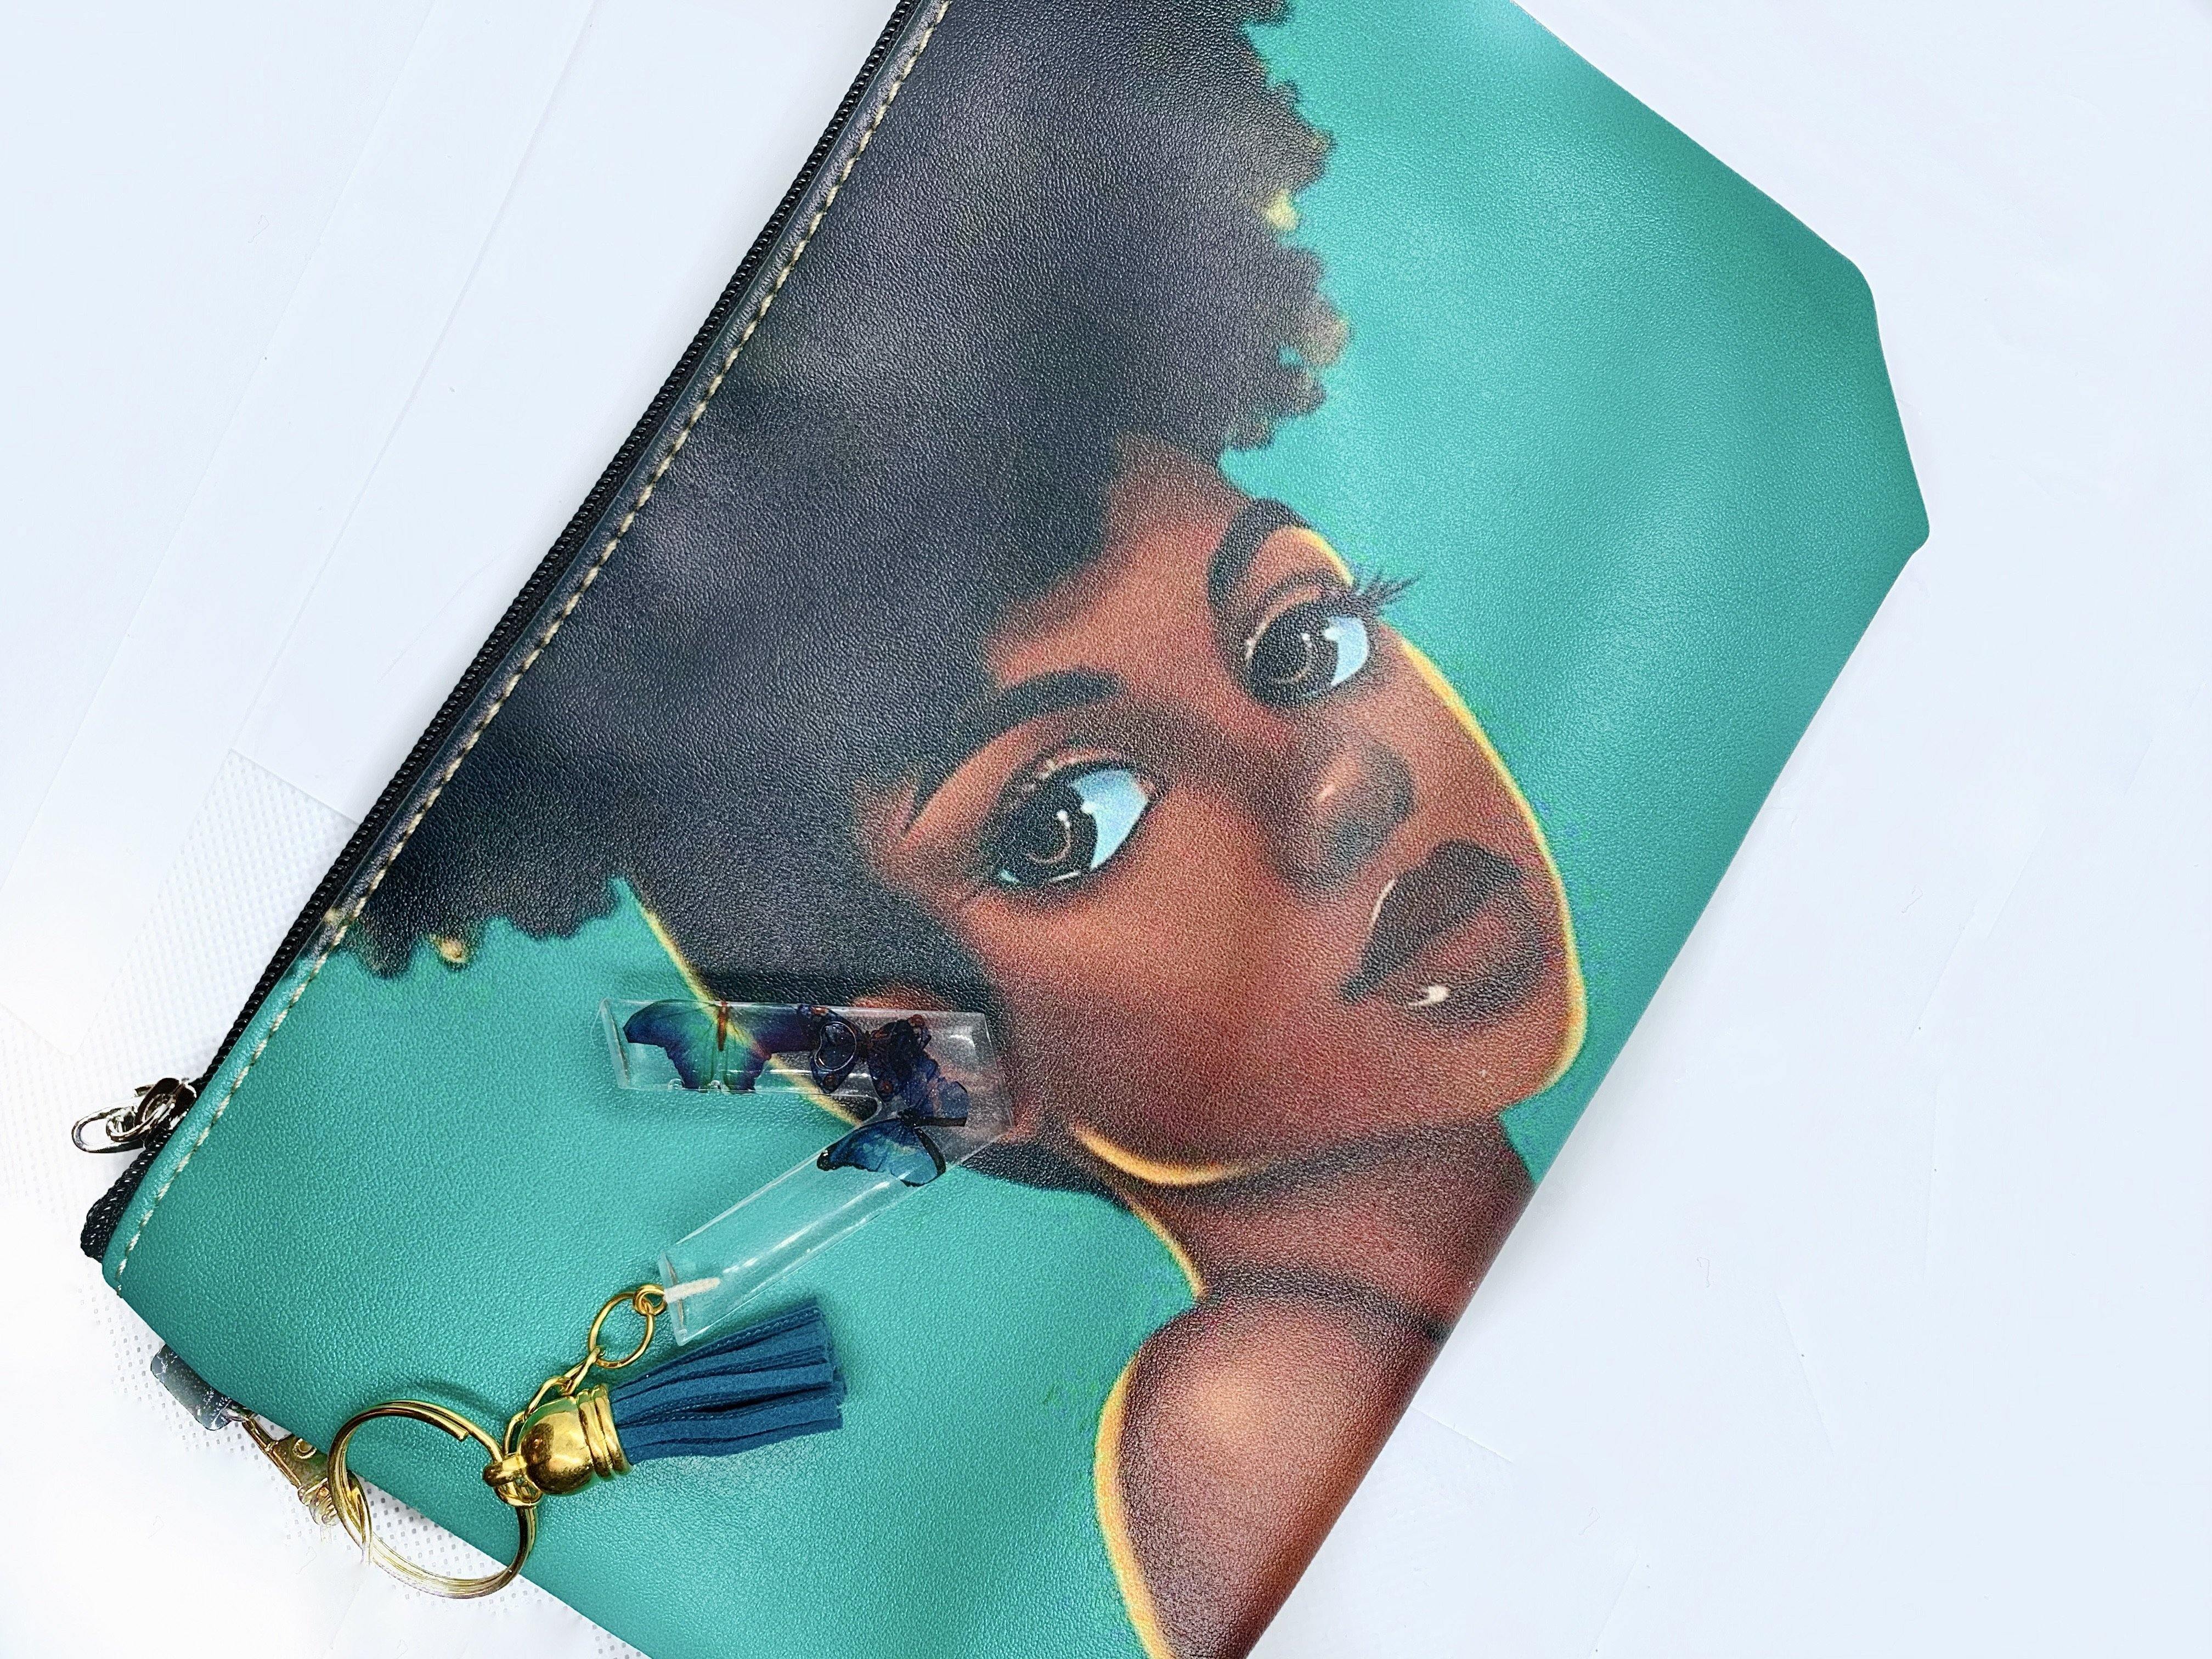 Mini makeup Cosmetic bags - Art & Scents Afrique 